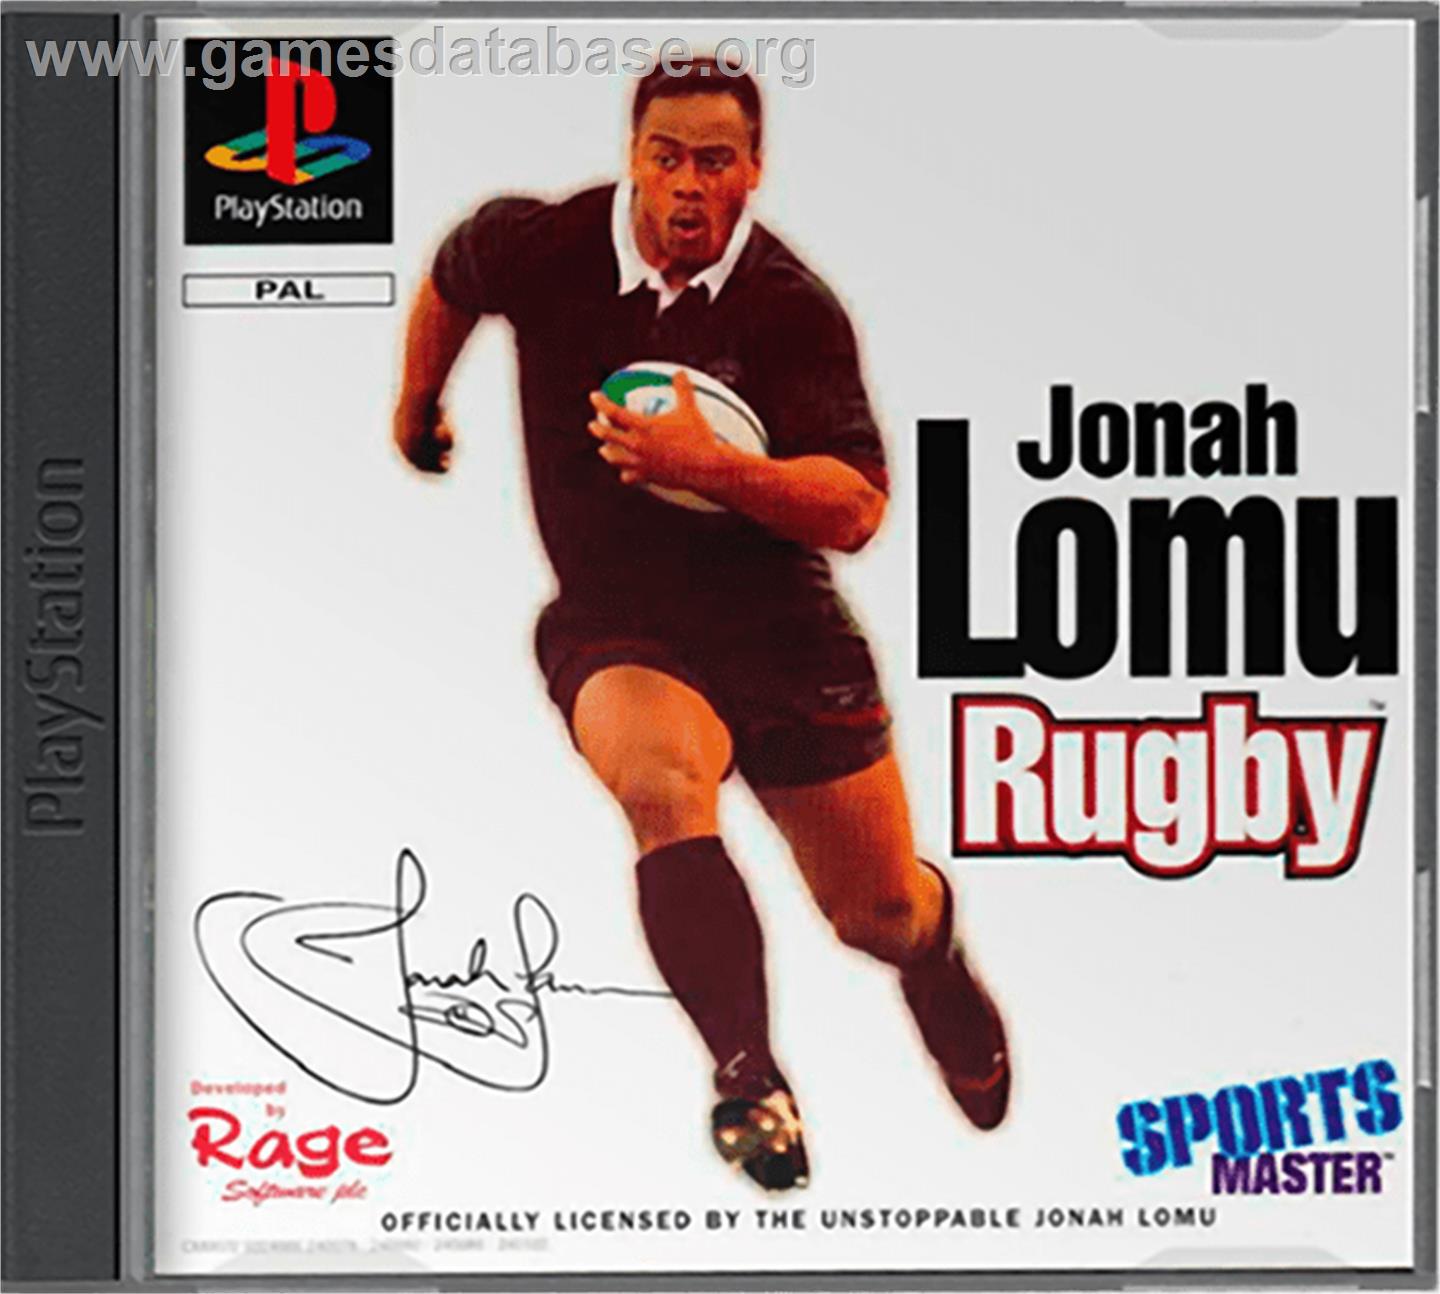 Jonah Lomu Rugby - Sony Playstation - Artwork - Box